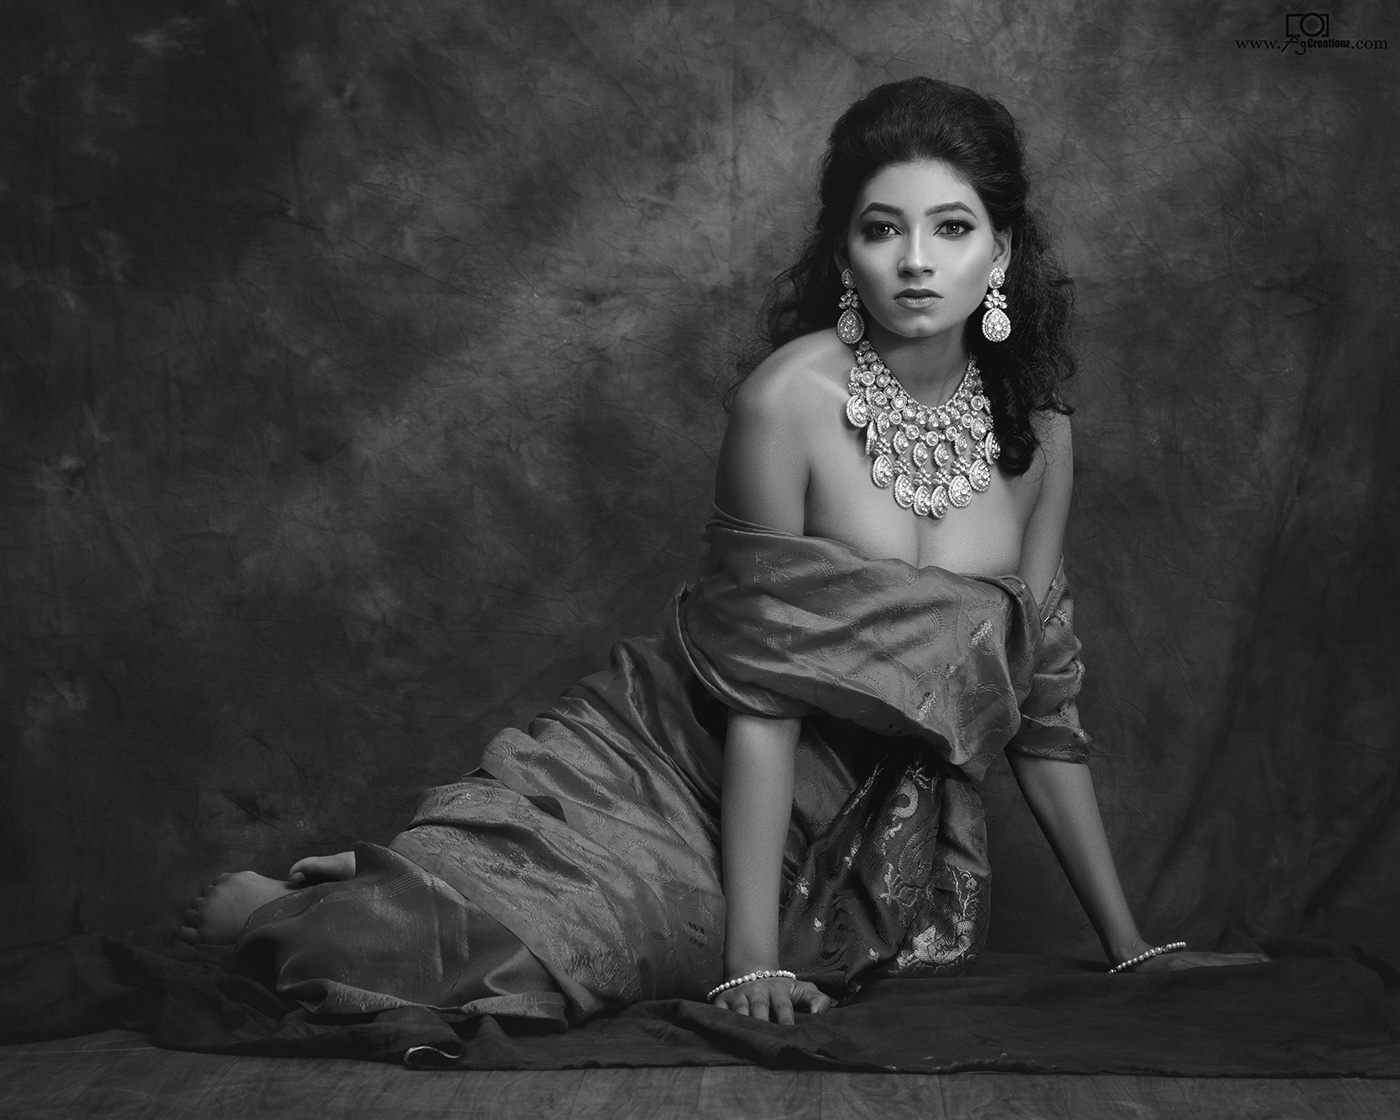 Chandigarh Jewellery photoshop retouching  saree